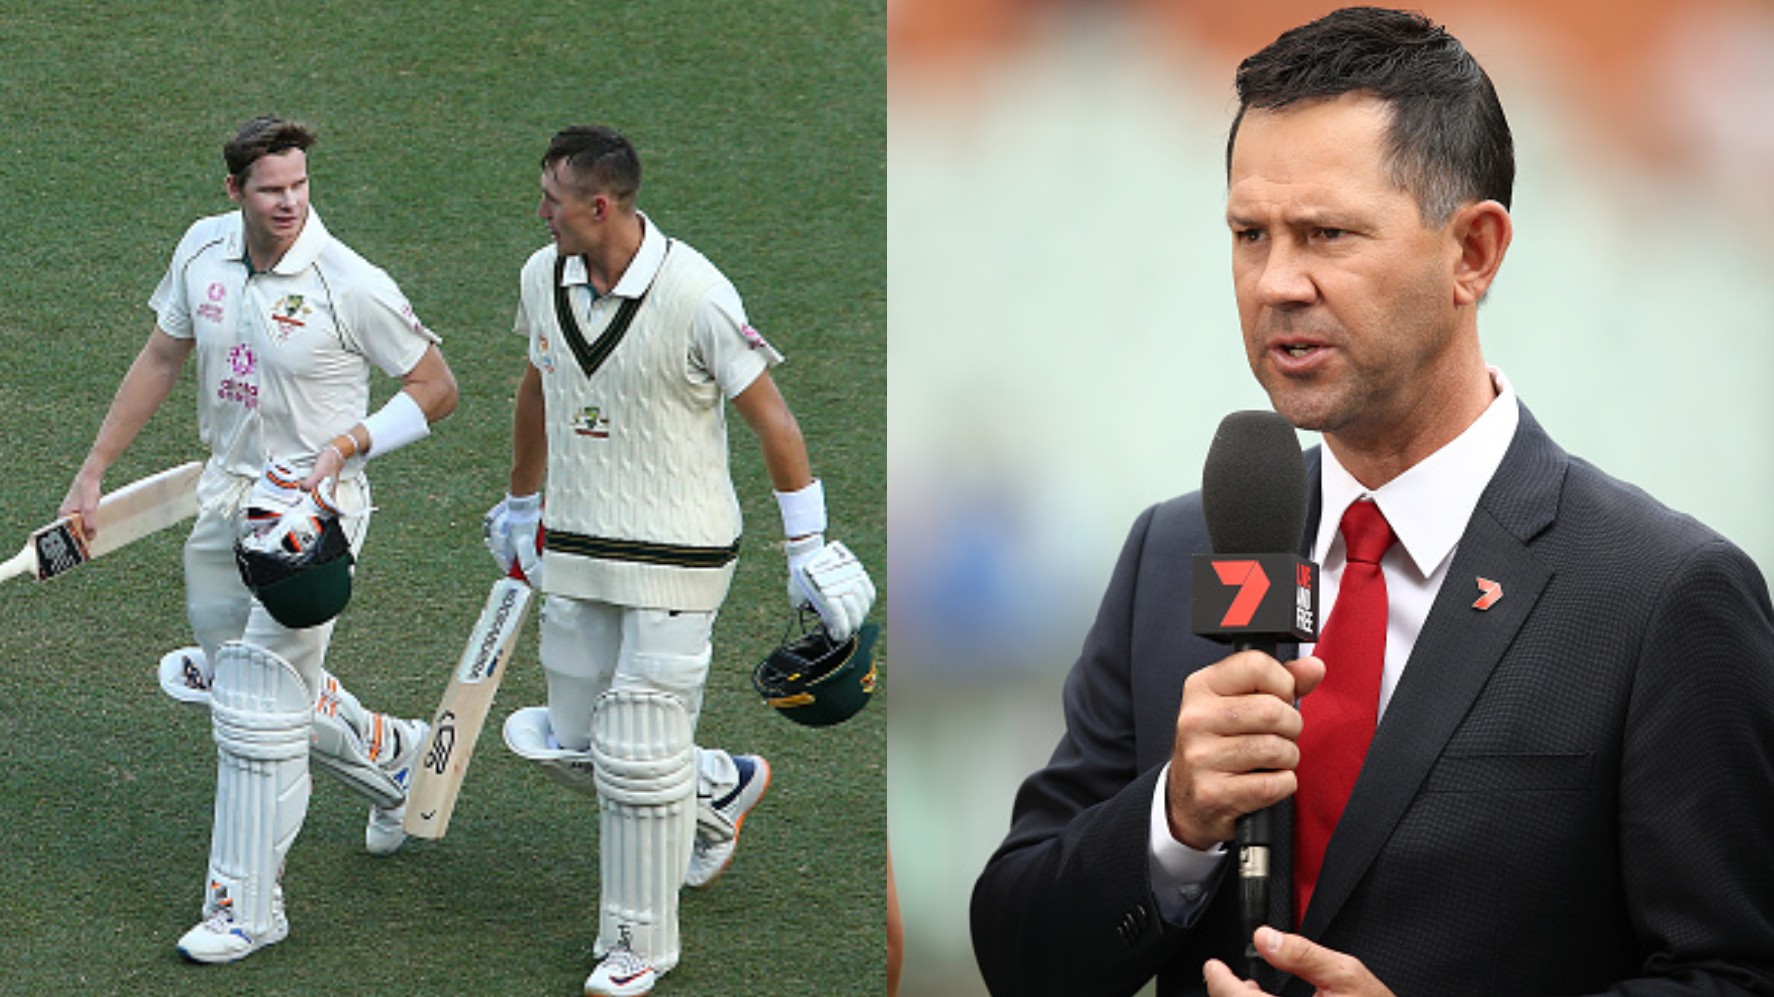 AUS v IND 2020-21: India ahead 55-45 after 2 days; onus on Australia batsmen to set up the chase – Ricky Ponting